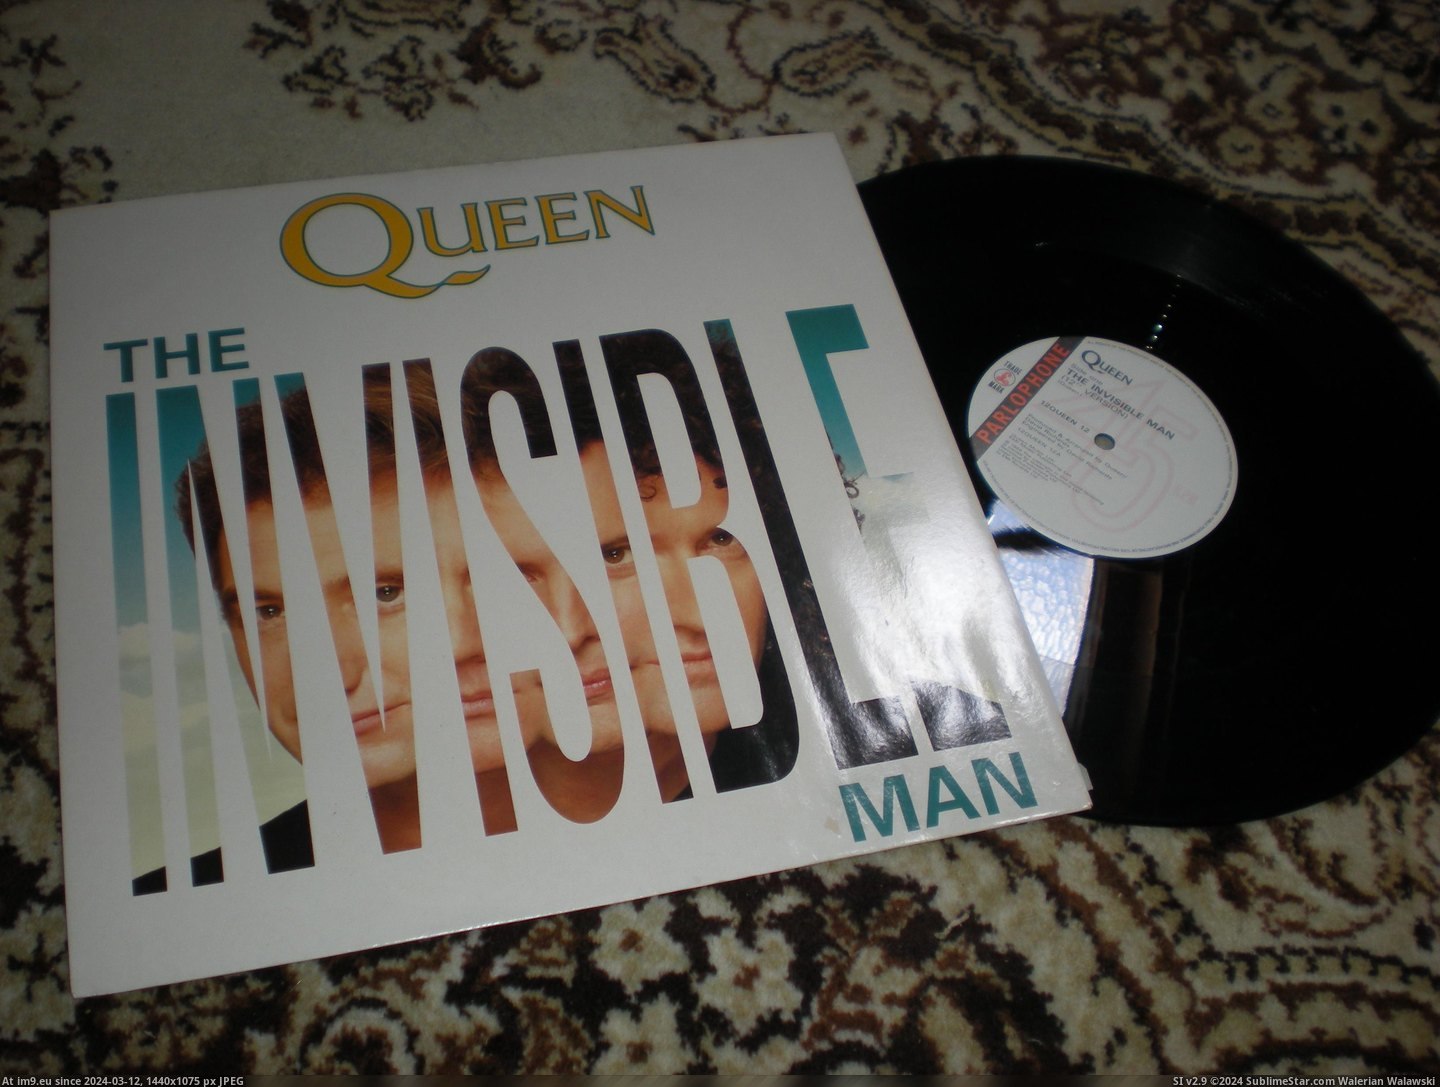 #Man #Invisible #Queen QUEEN Invisible Man Pic. (Obraz z album new 1))